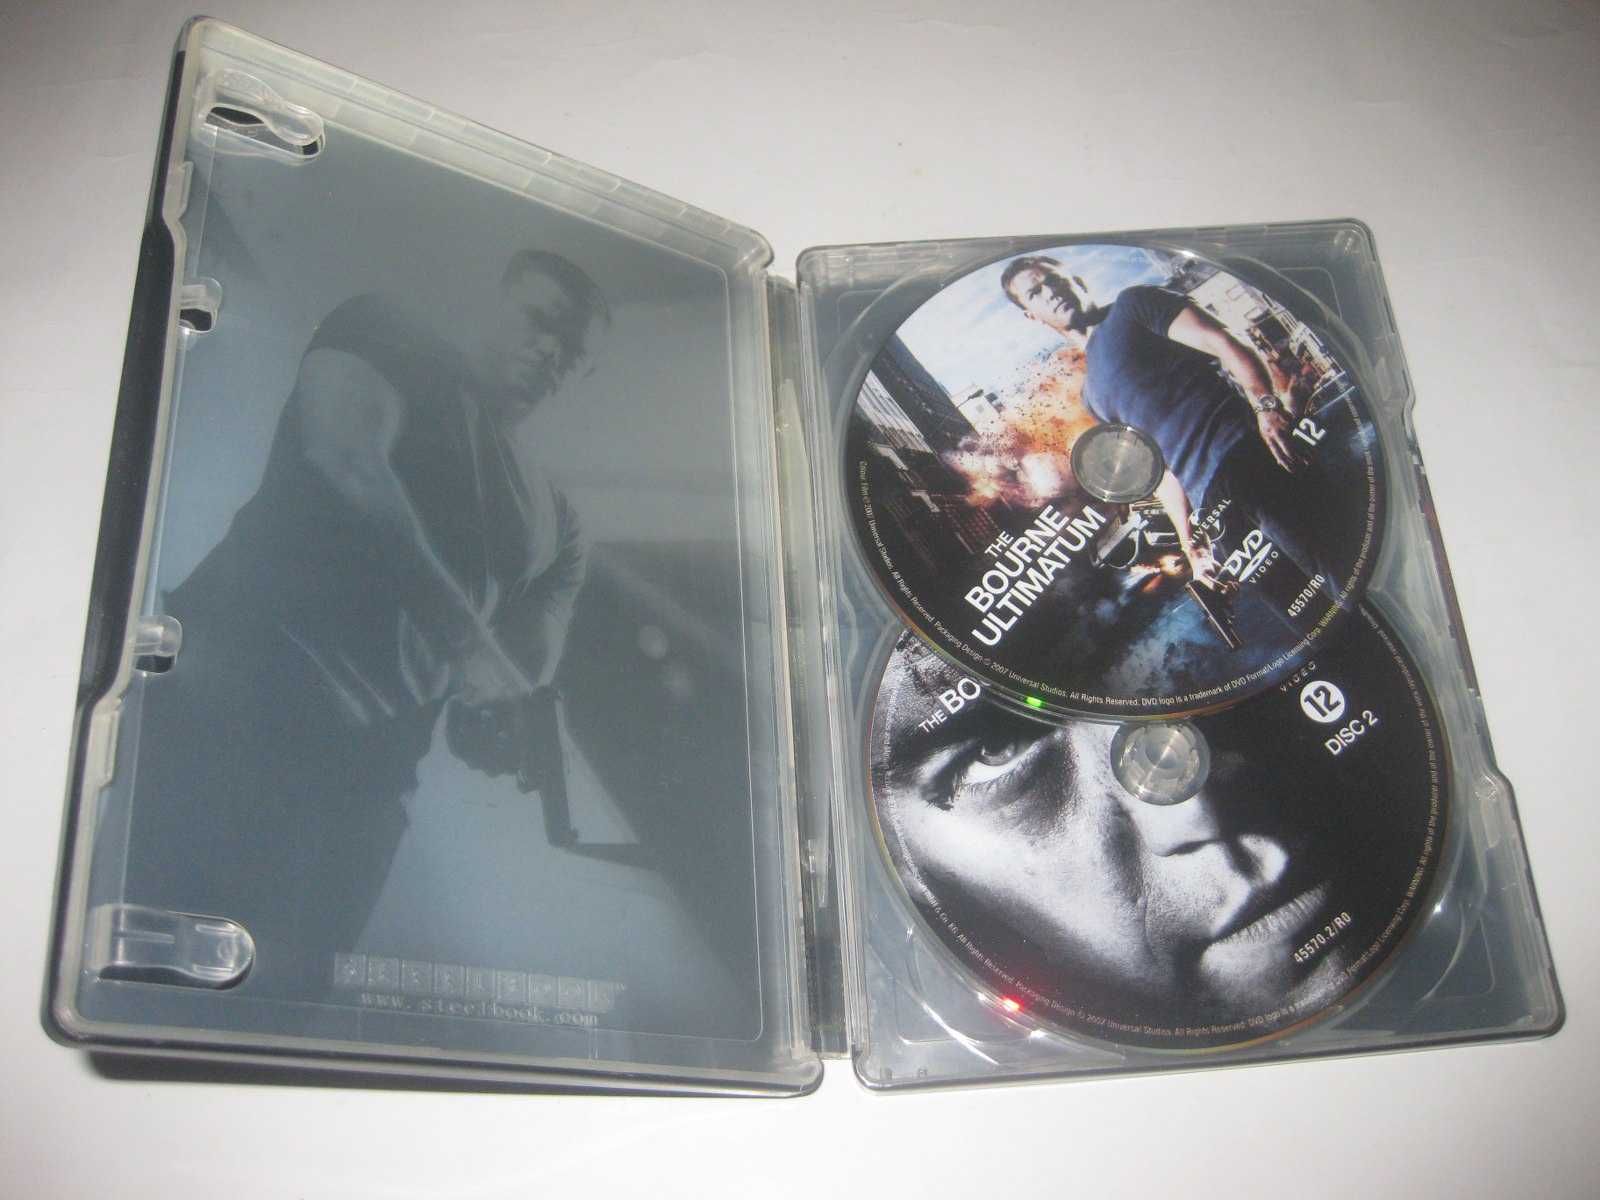 "Ultimato" com Matt Damon/2 DVDs/Steelbook